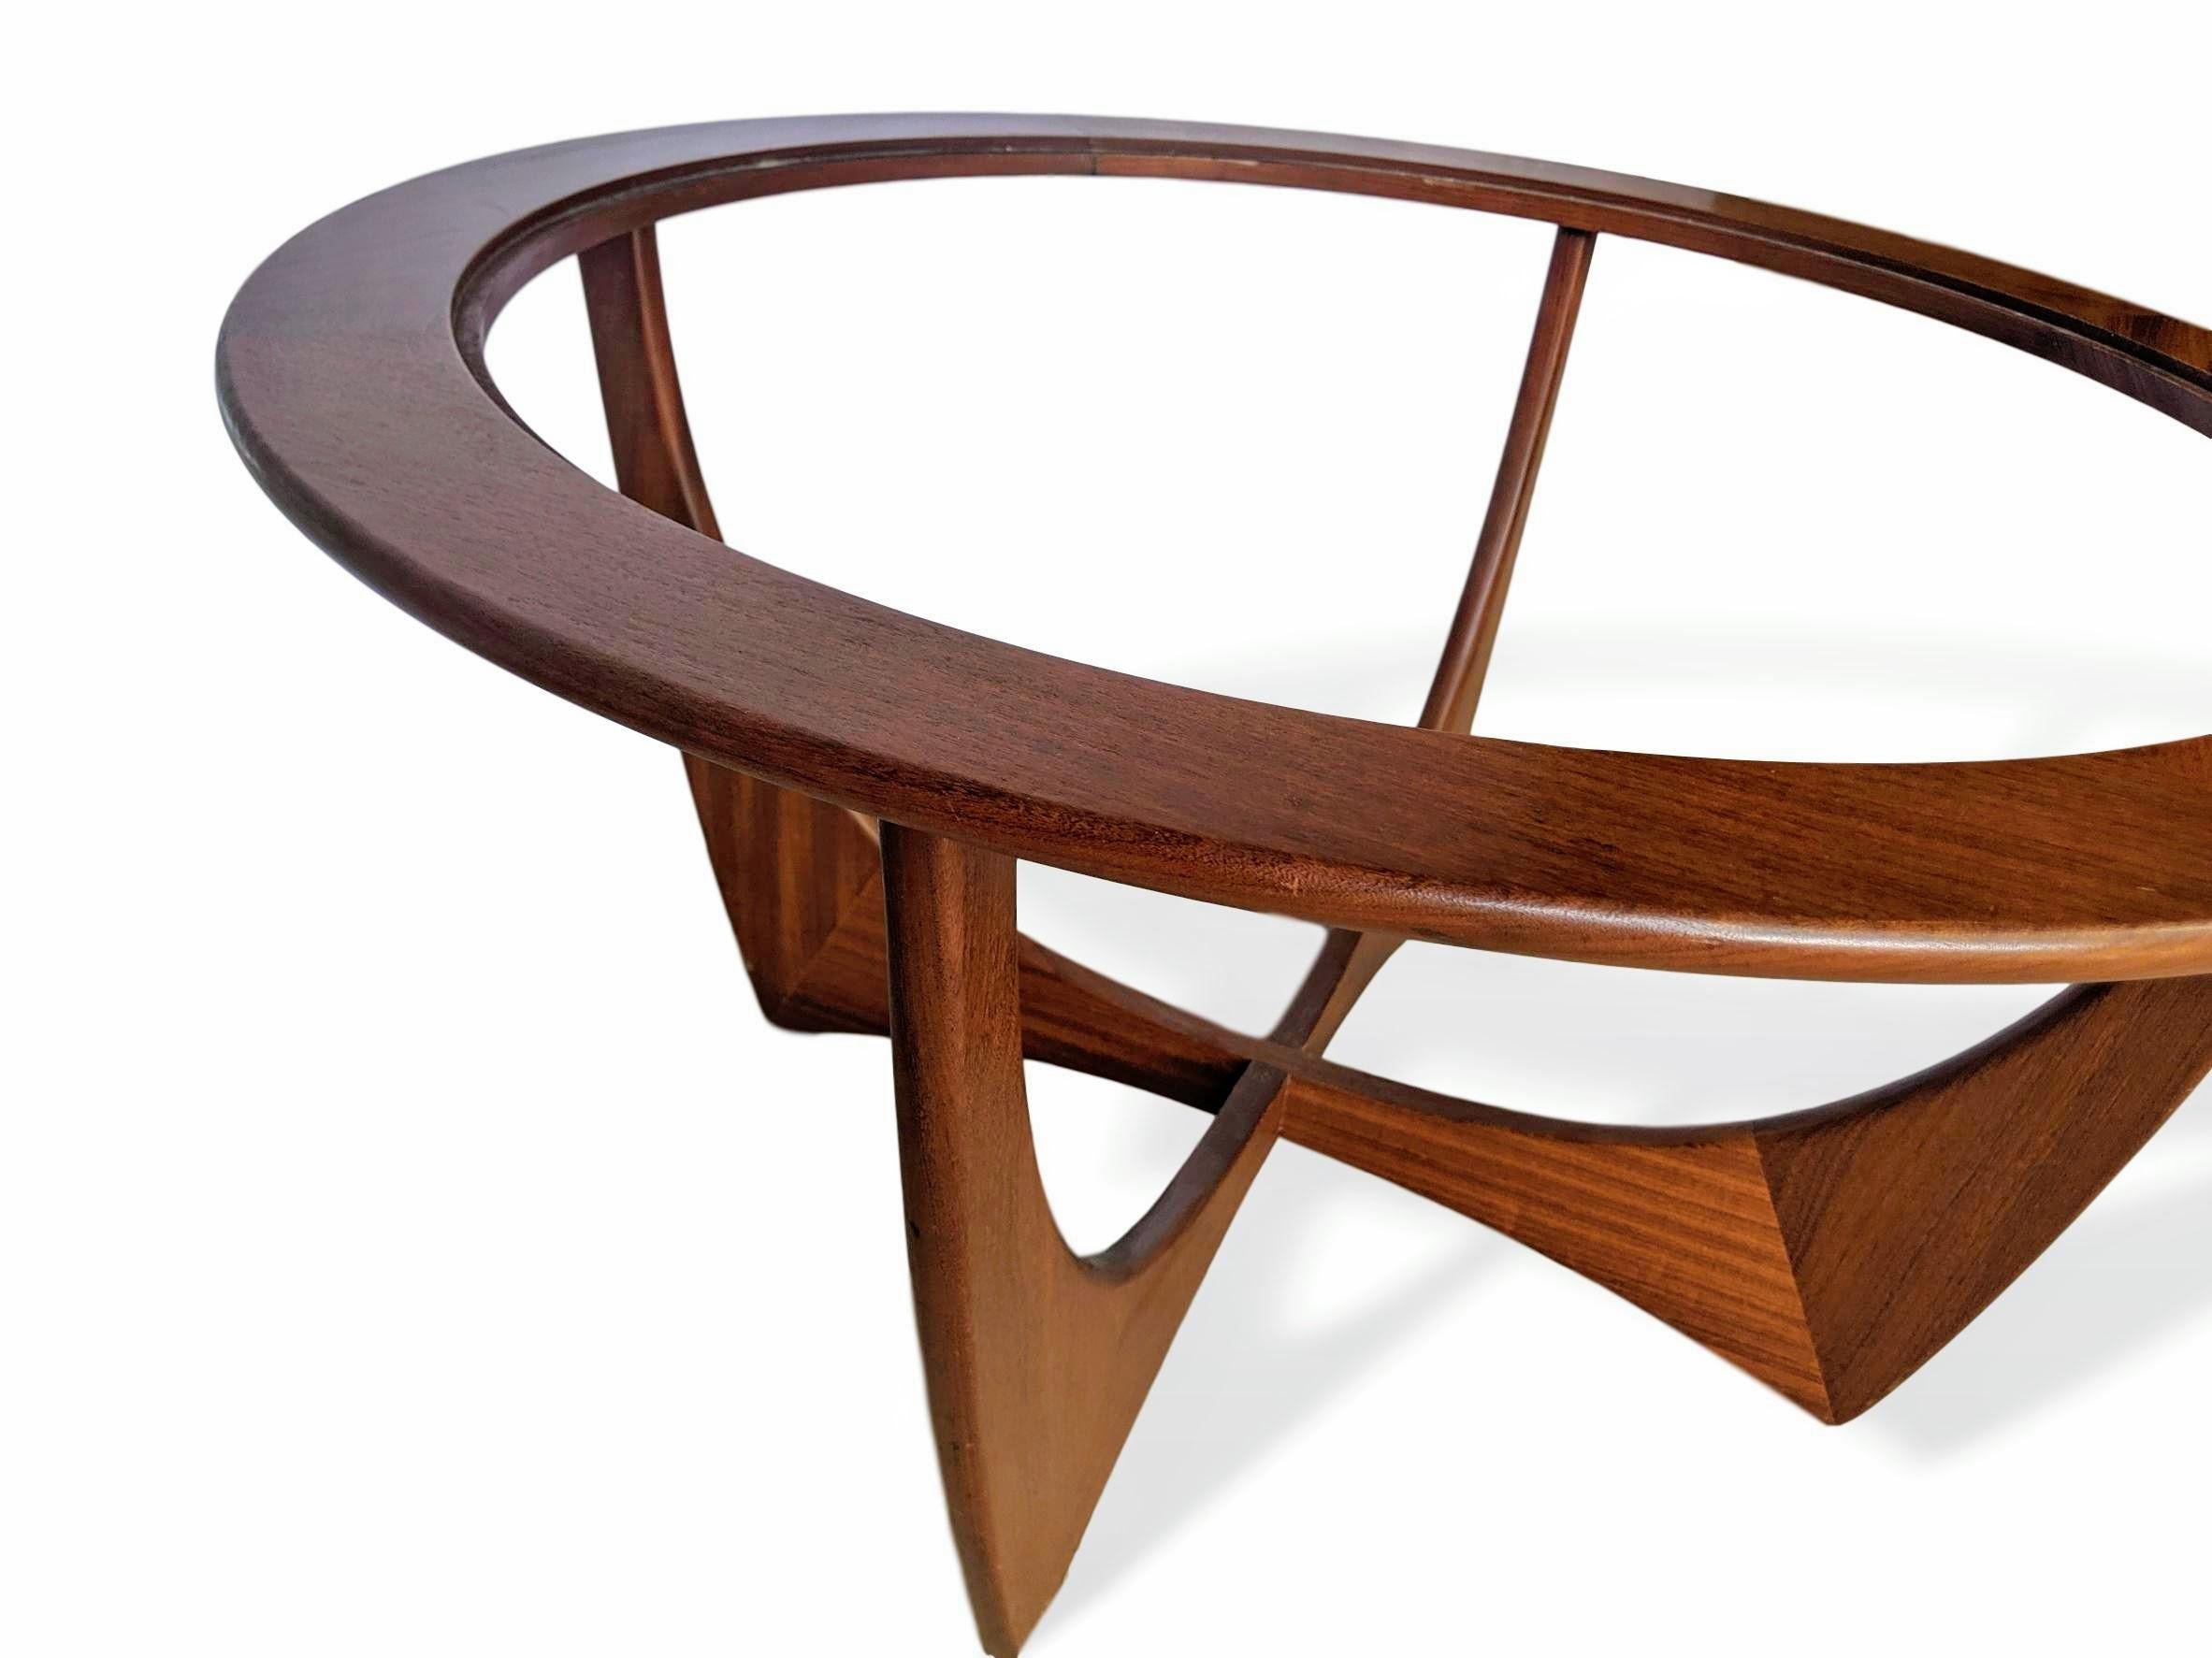 Mid-20th Century Mid-Century Modern “Astro” Coffee Table by G-Plan, English, circa 1960